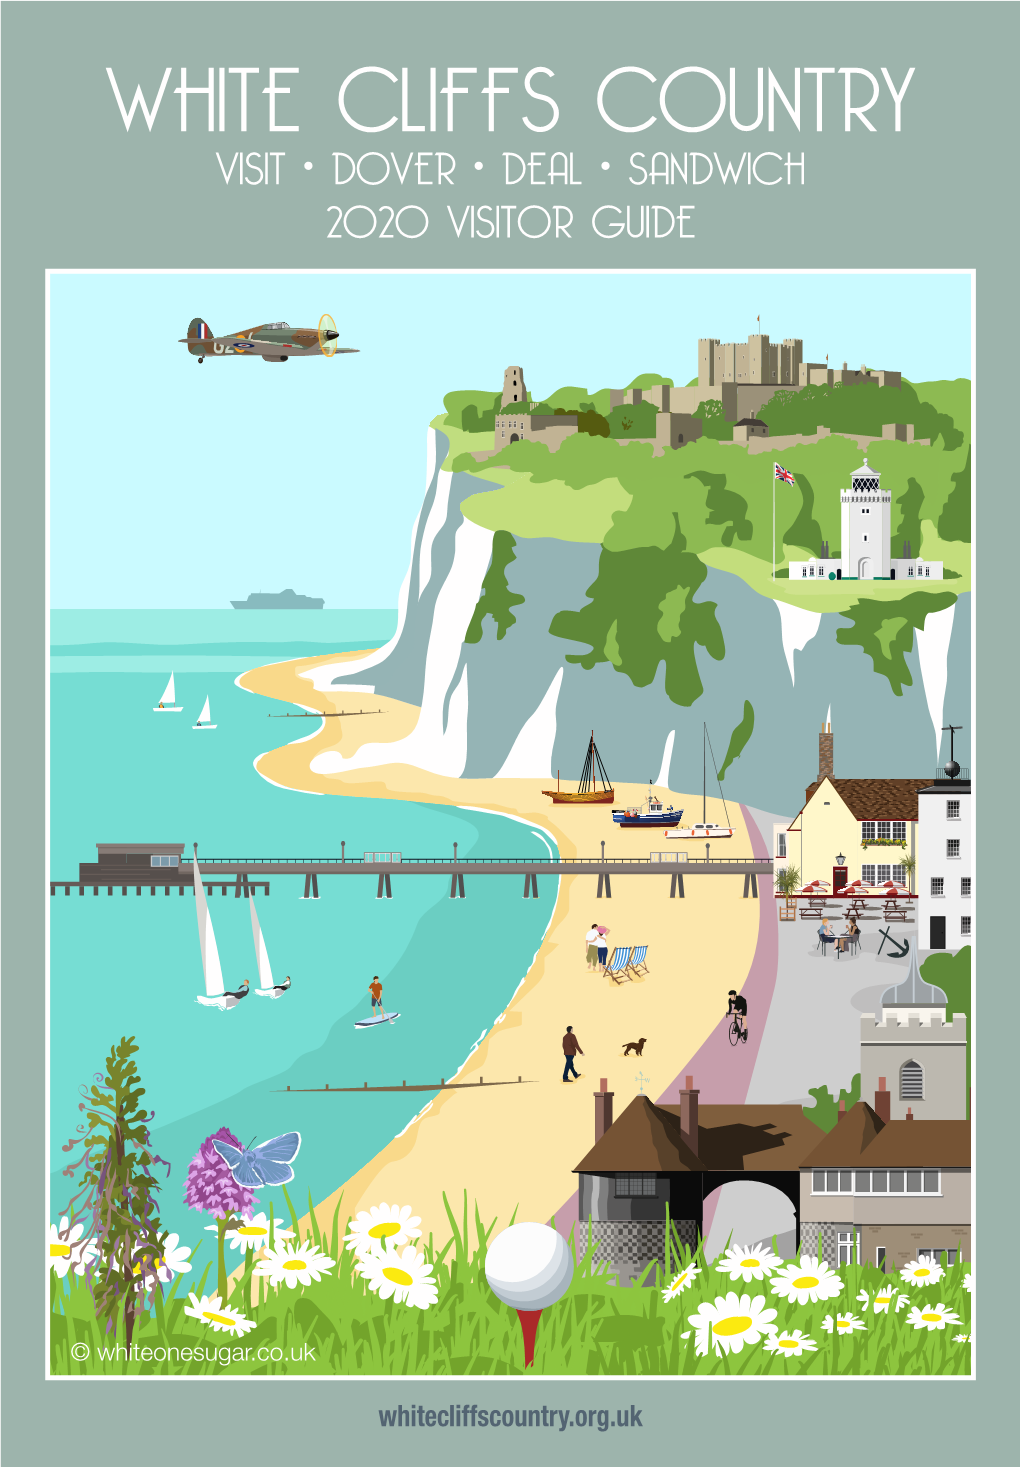 Visit • Dover • Deal • Sandwich 2020 Visitor Guide